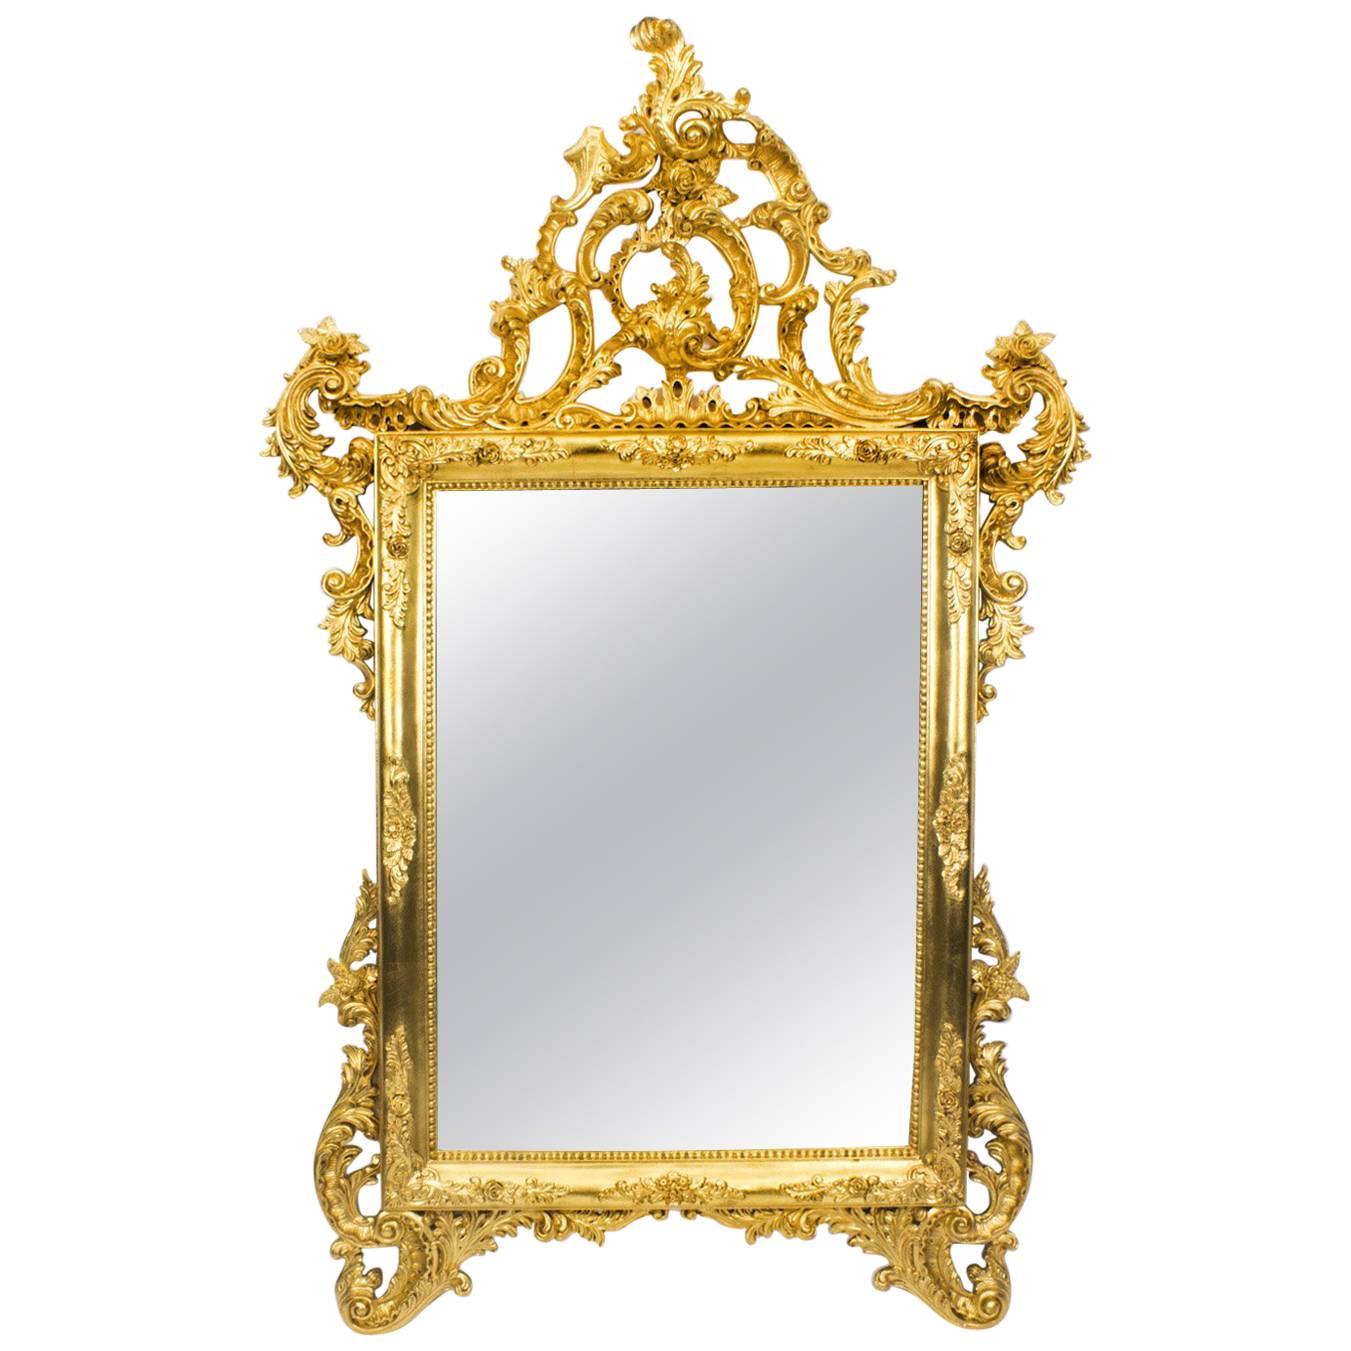 Stunning Italian Rococo Giltwood Decorative Mirror